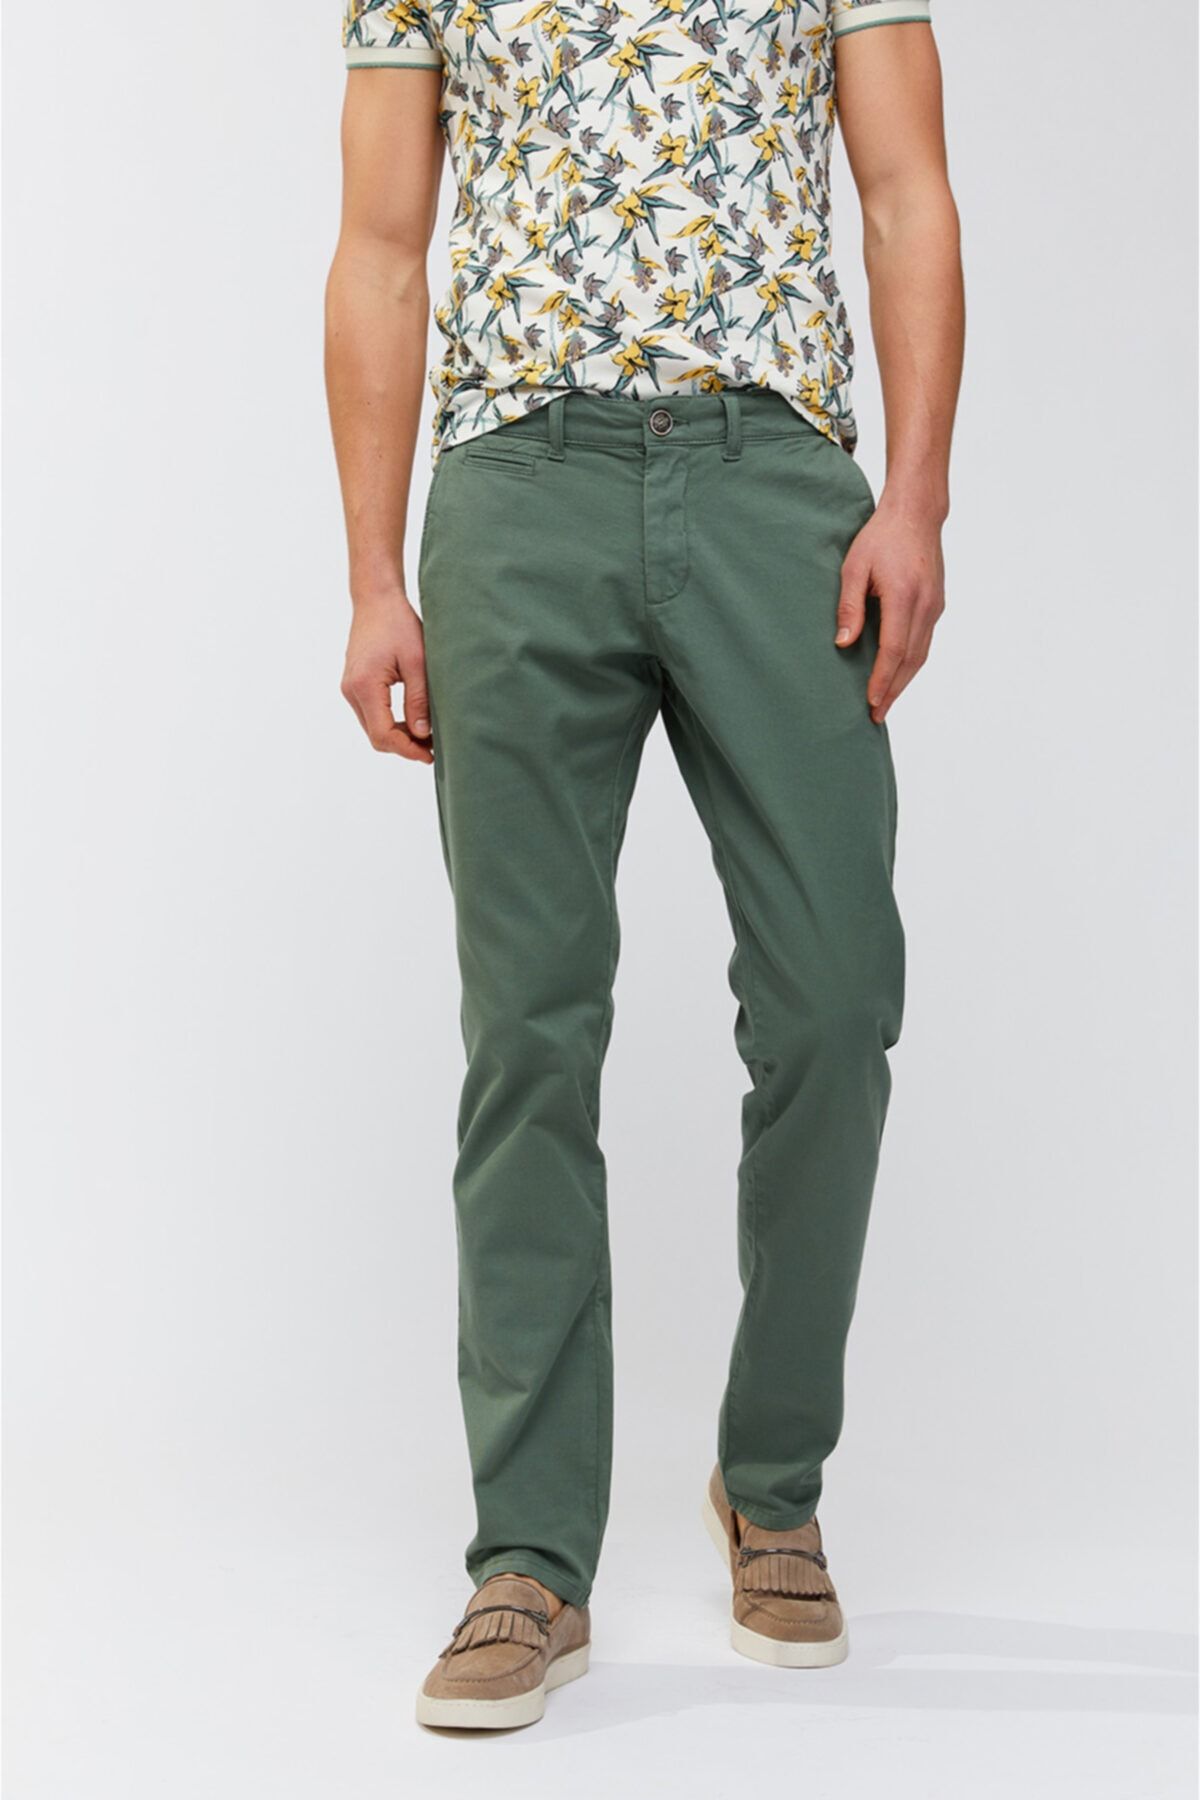 Avva Erkek Yeşil Yandan Cepli Düz Slim Fit Pantolon A91b3556